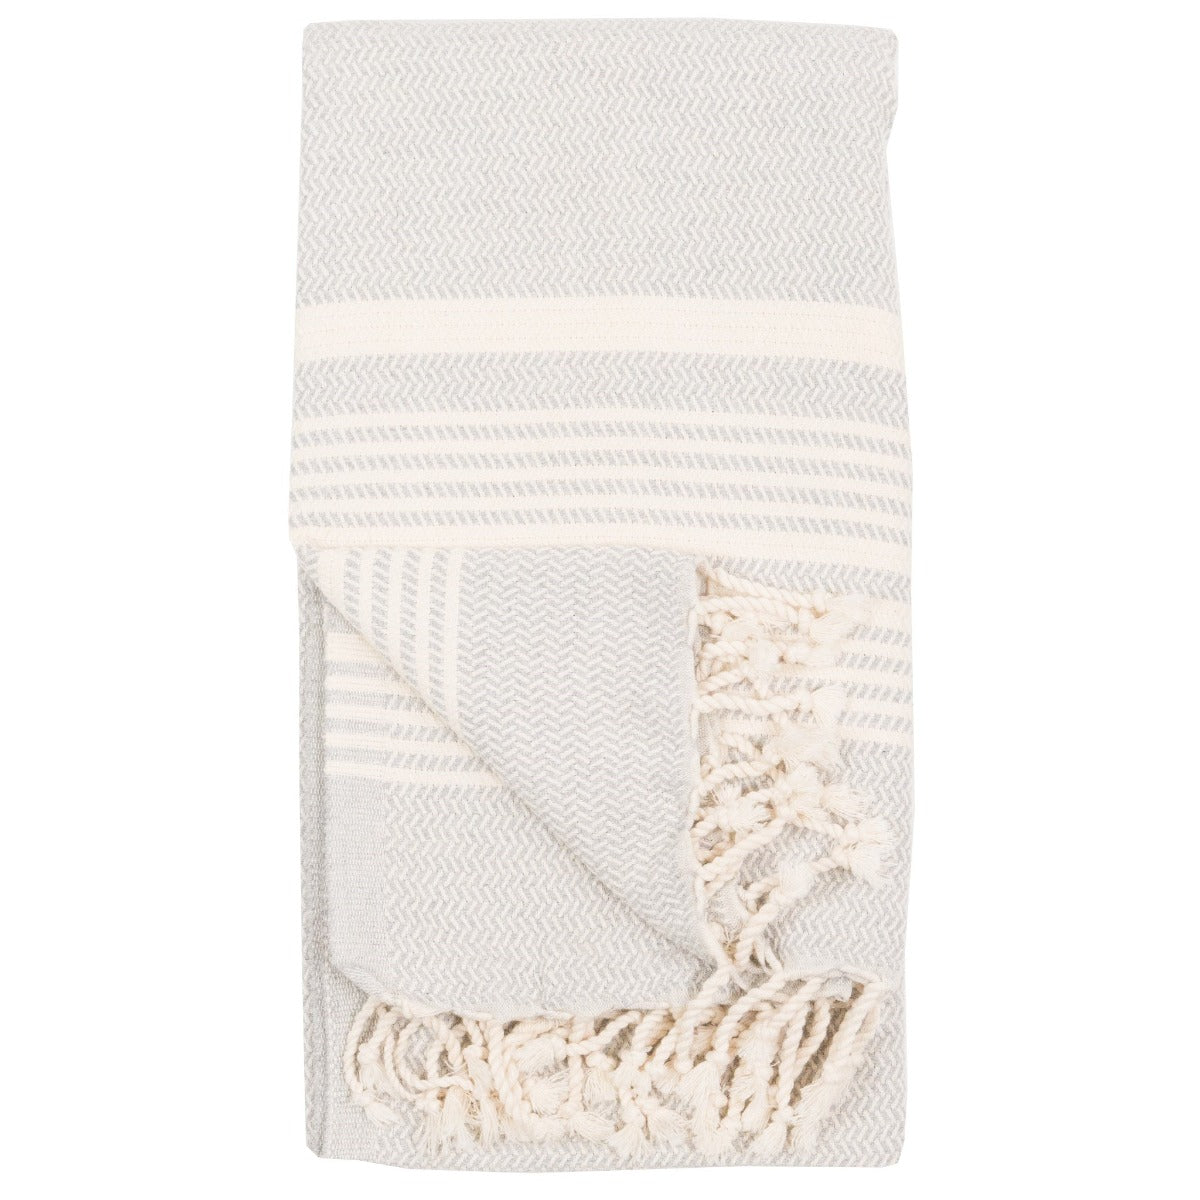 Mist-Colored, Hasir Turkish Bath Towel: it has micro-herringbone pattern, hand-spun tassels, a neutral hue for a calm coastal colour story.